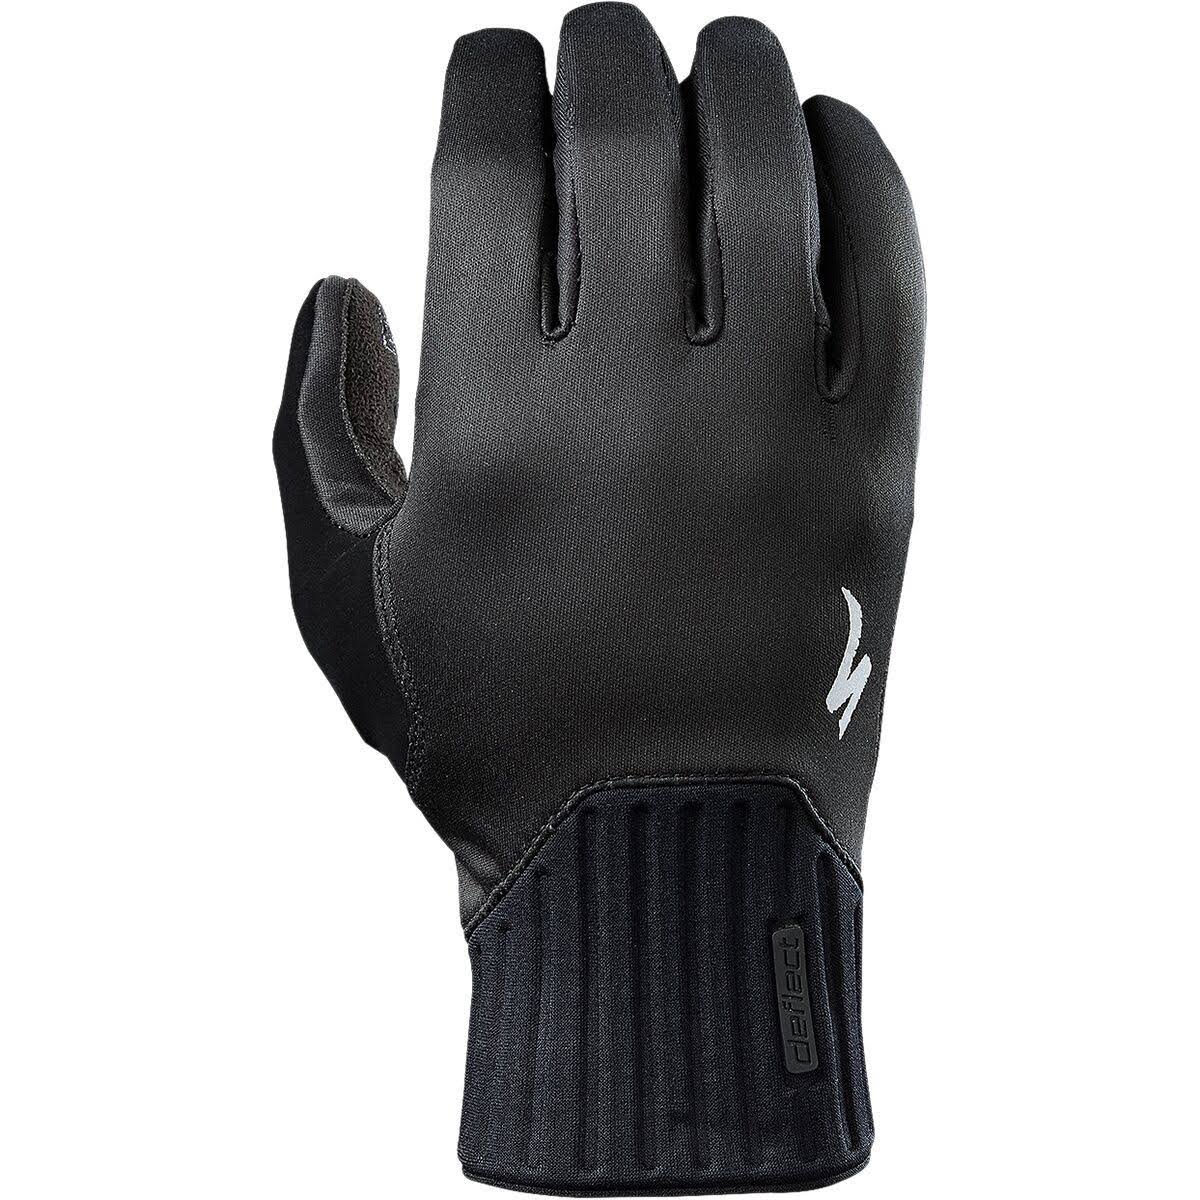 Specialized Deflect Men's Cycling Glove - Black, Medium